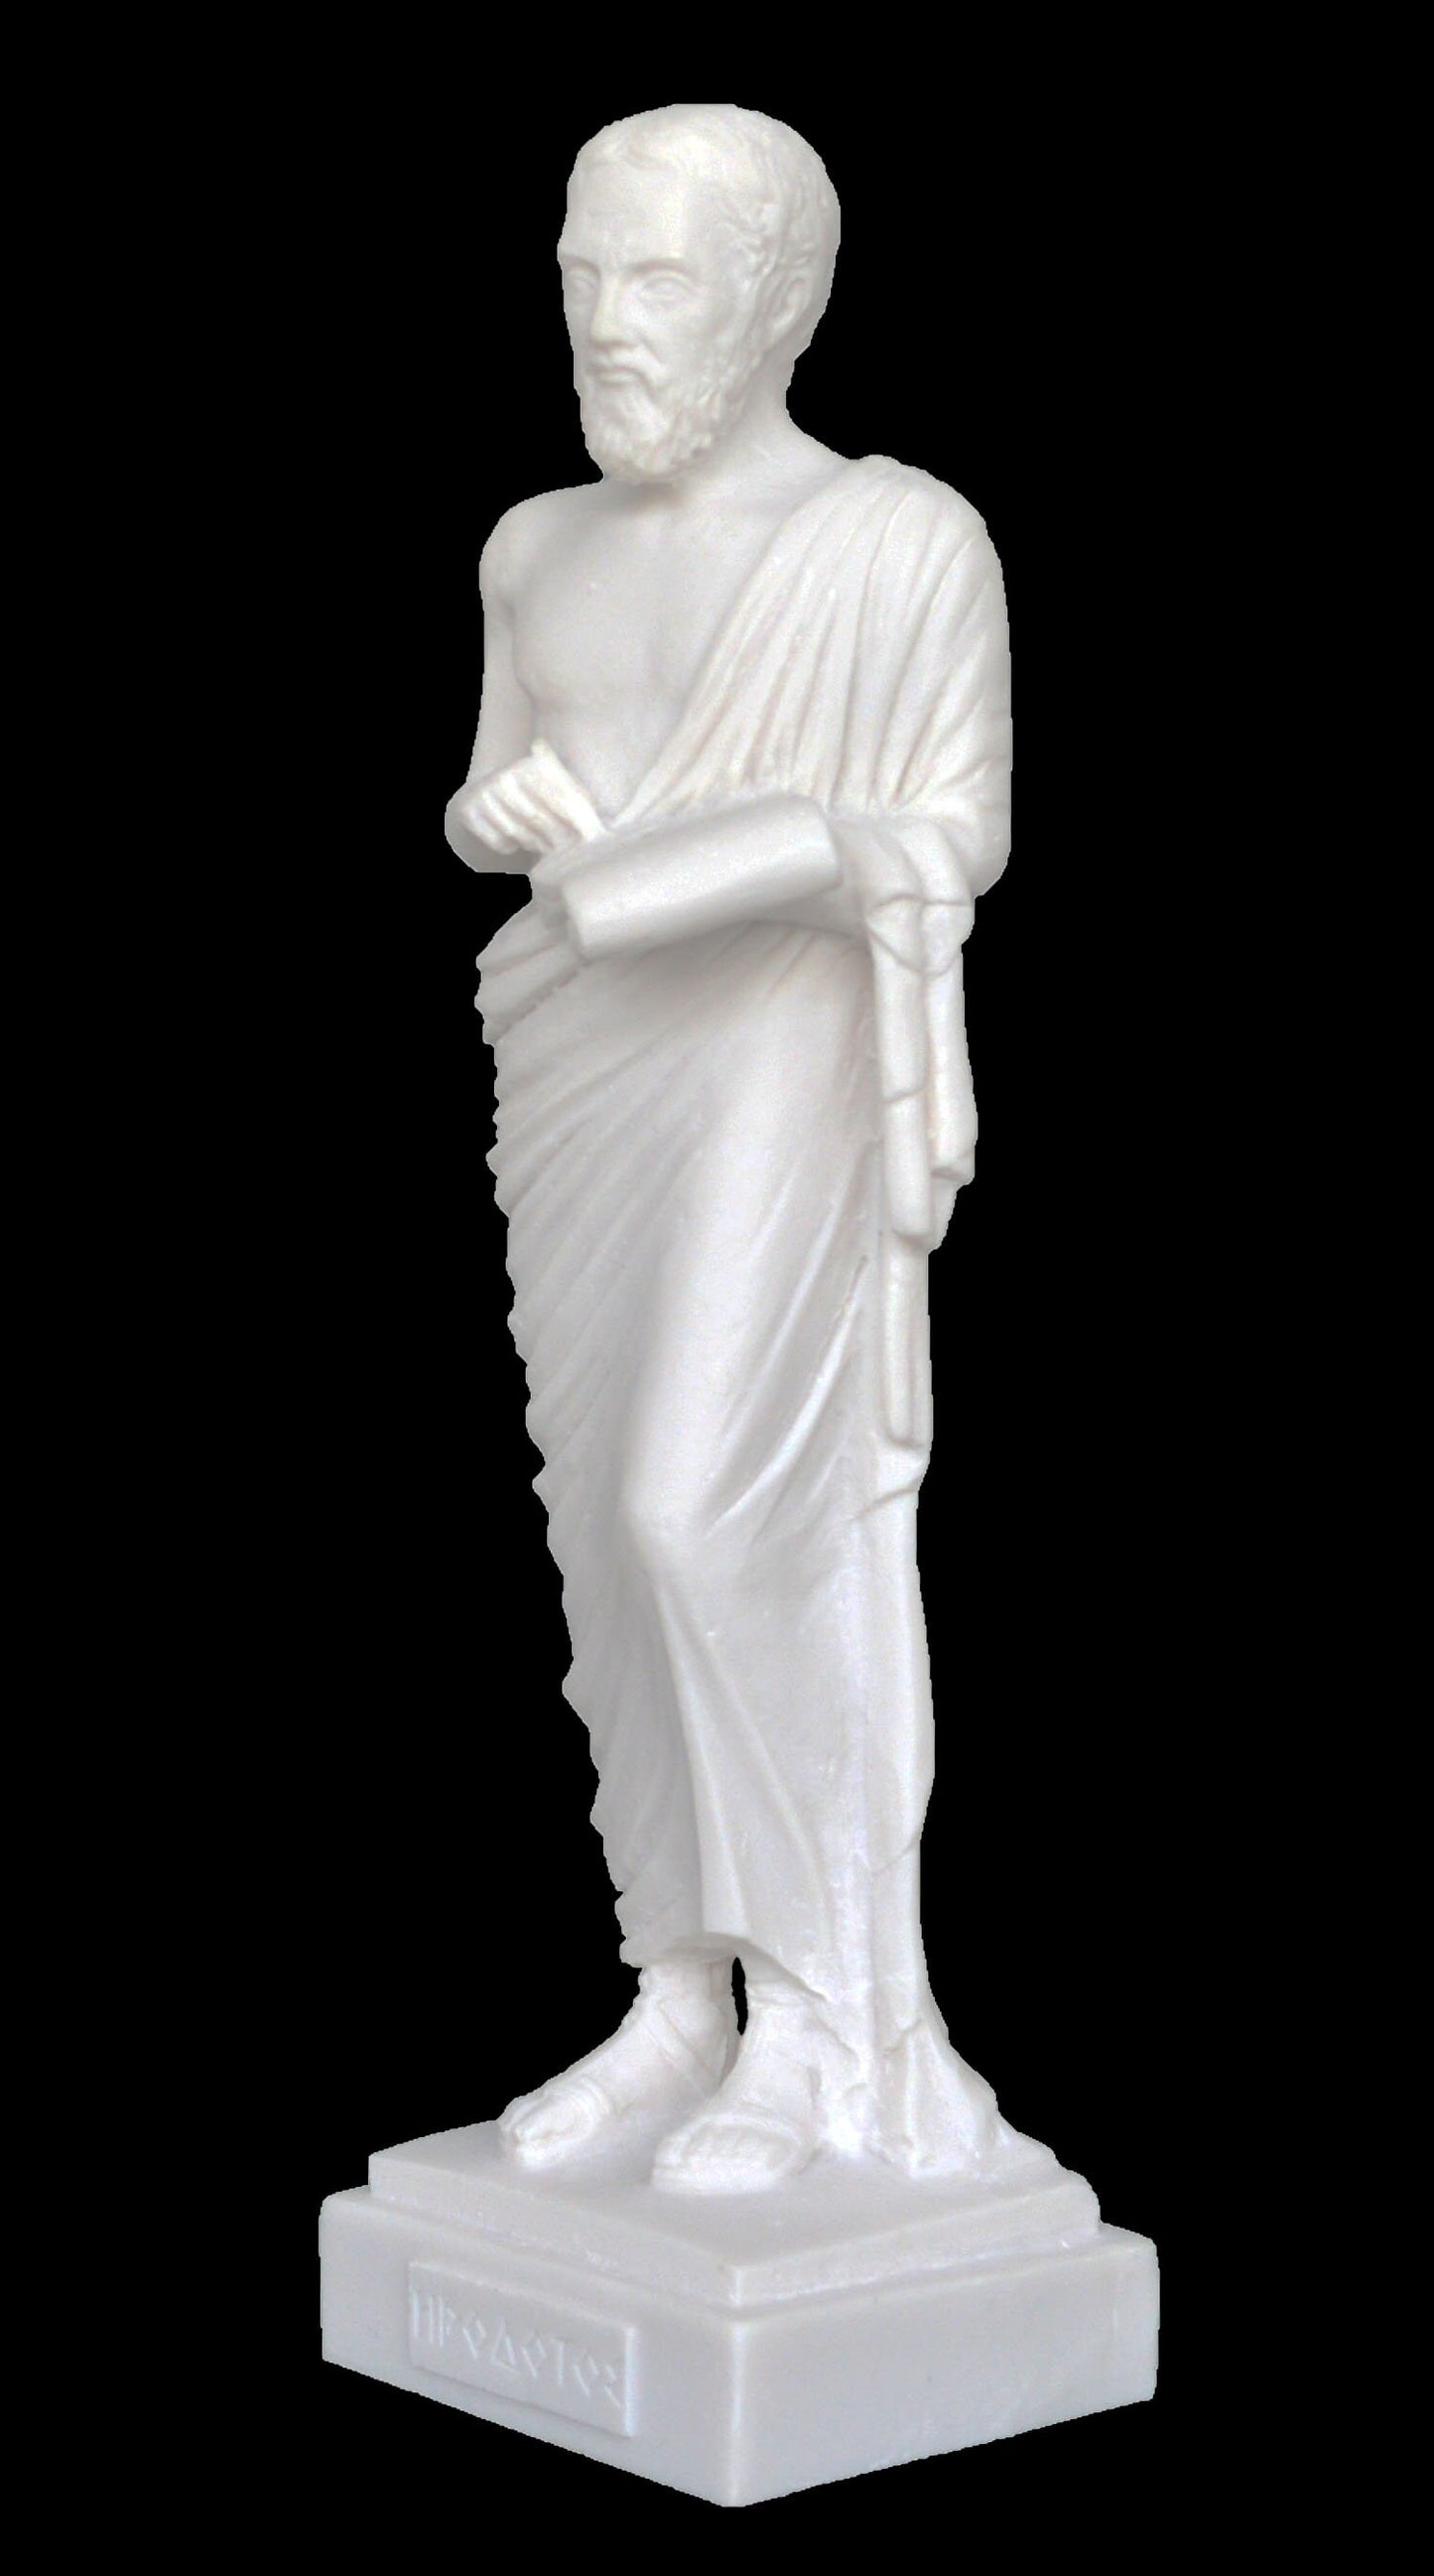 Herodotus - Ancient Greek Historian, Father of History - Halicarnassus, 484–425 BC - Alabaster Statue Sculpture